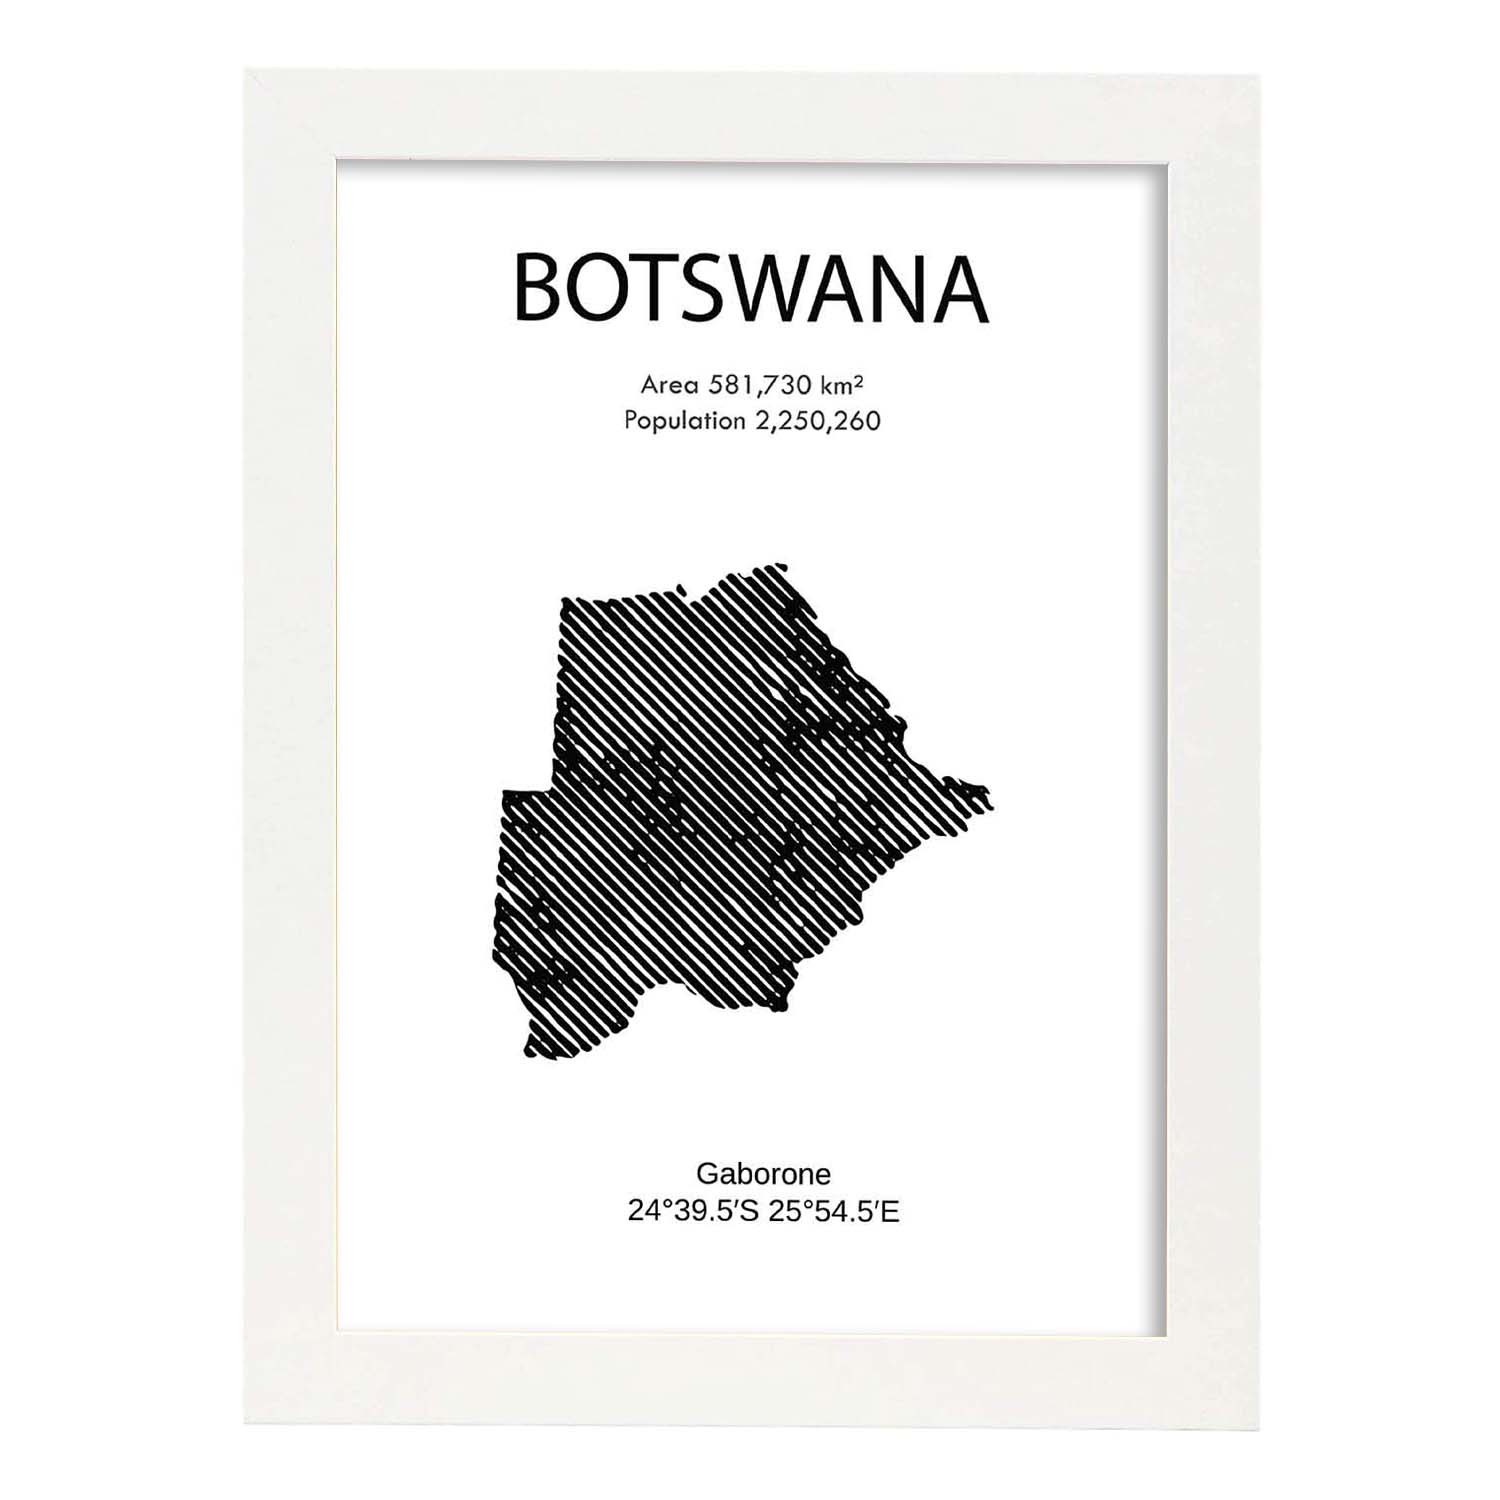 Poster de Botswana. Láminas de paises y continentes del mundo.-Artwork-Nacnic-A3-Marco Blanco-Nacnic Estudio SL